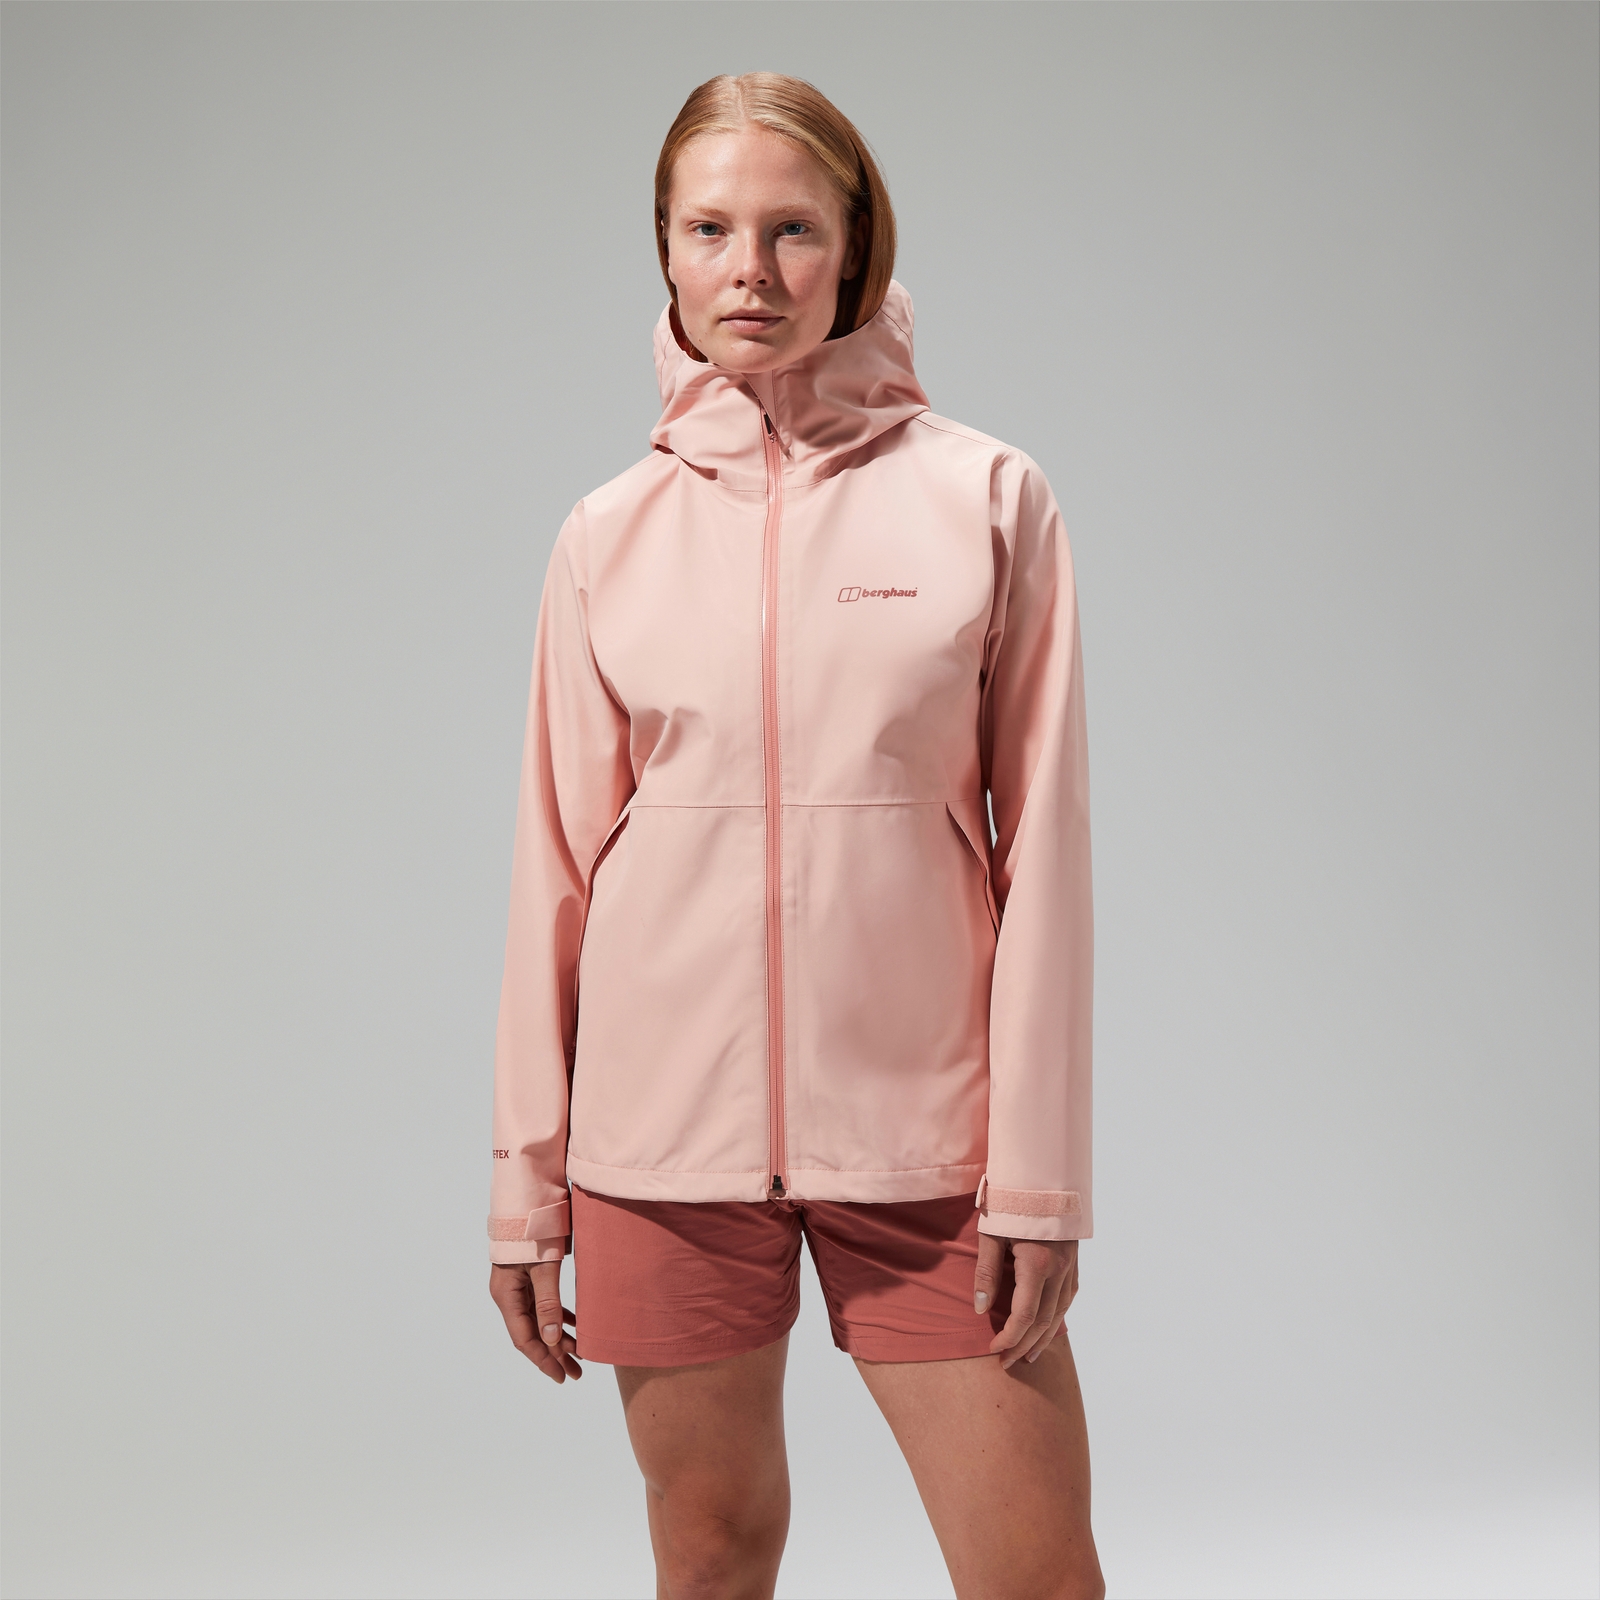 Women’s Bramblfell InterActive Gore-Tex Waterproof Jacket Pink